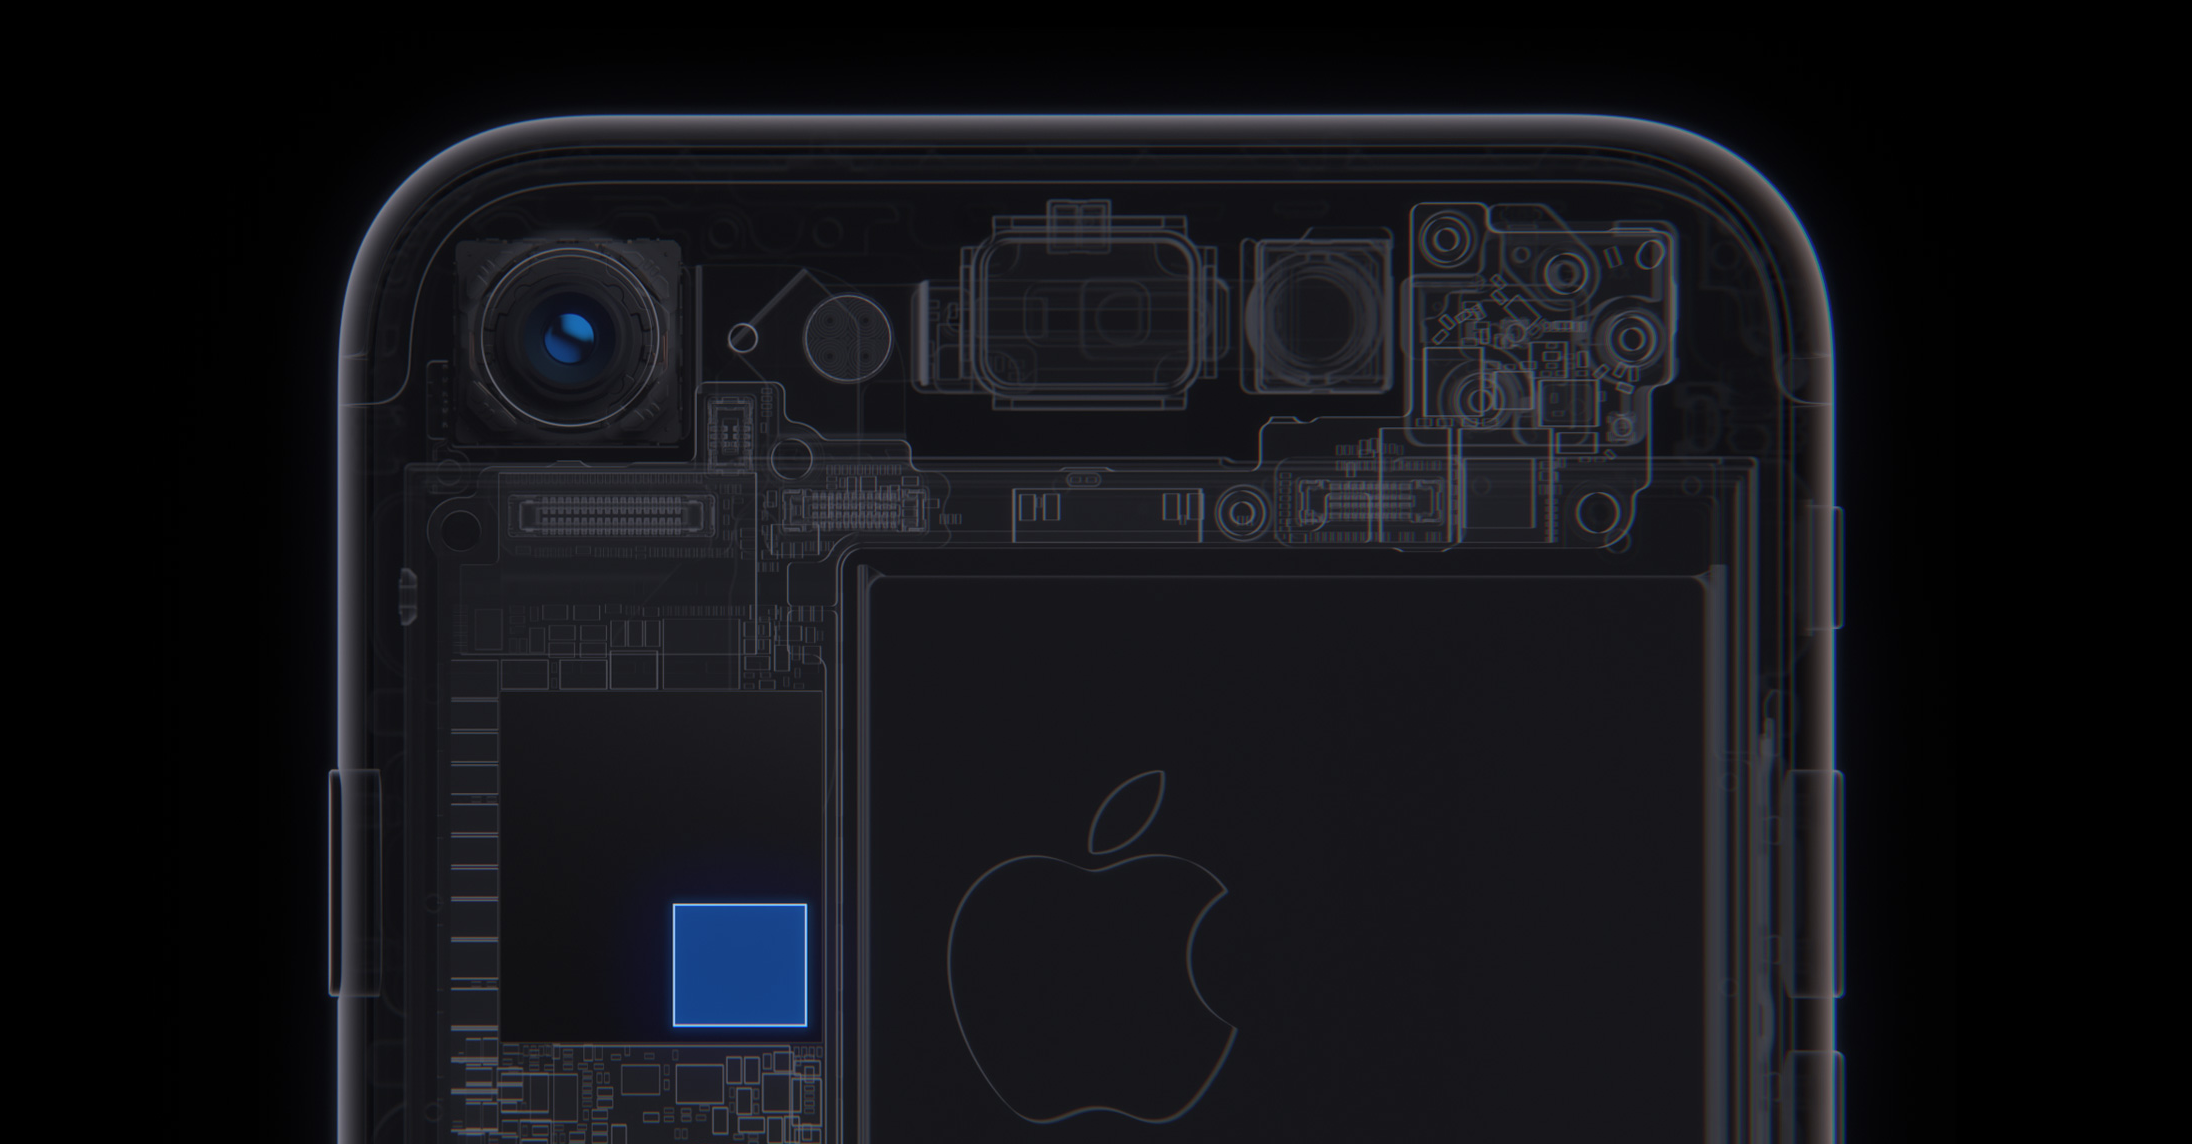 Apple iPhone 7 plus image processor